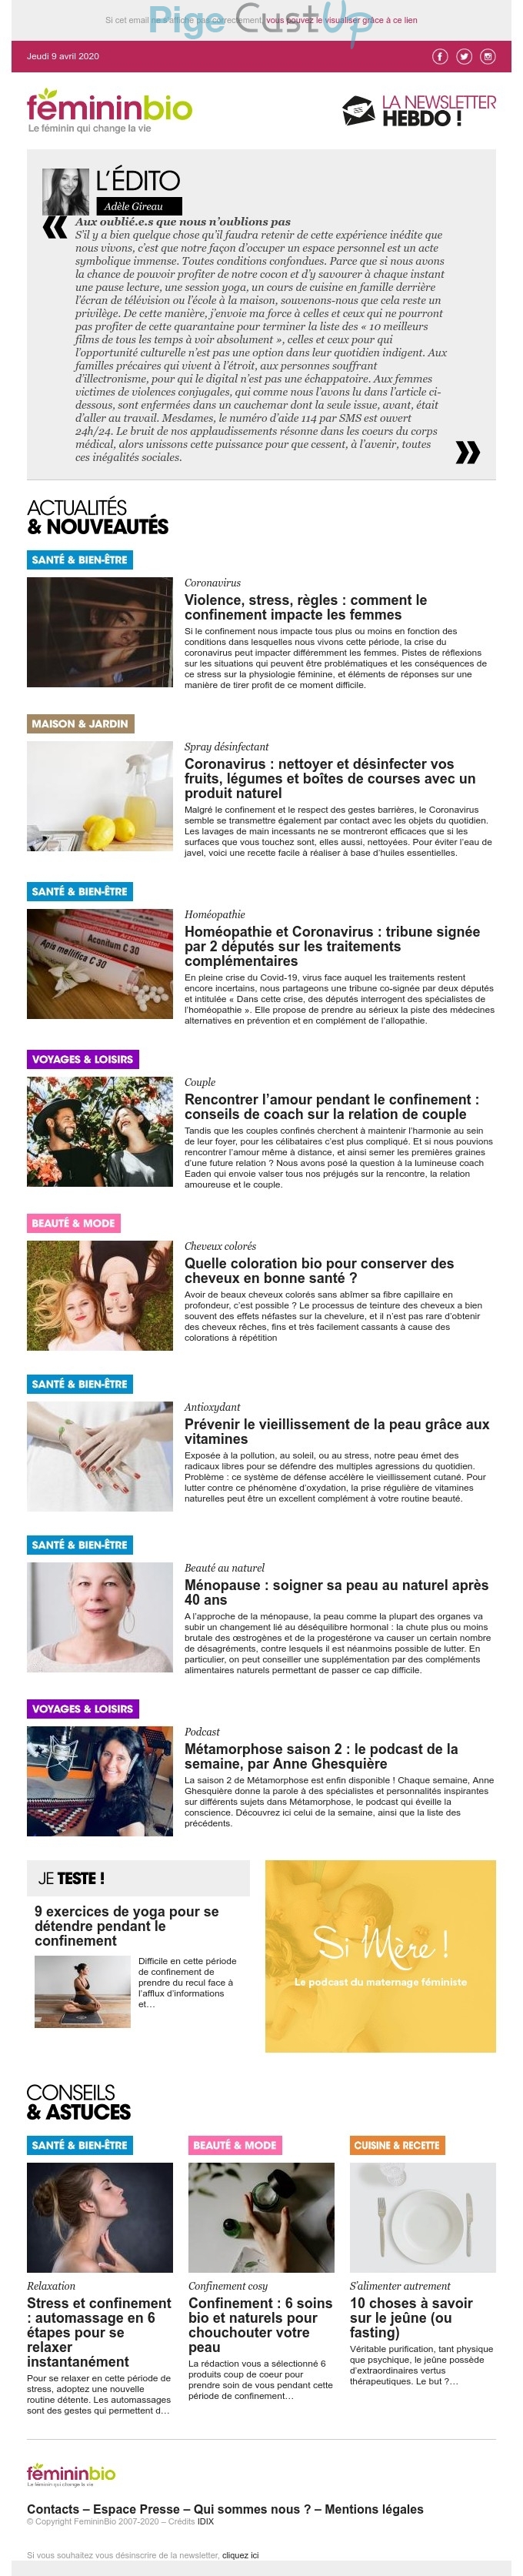 Exemple de Type de media  e-mailing - Fémininbio - Marketing relationnel - Newsletter